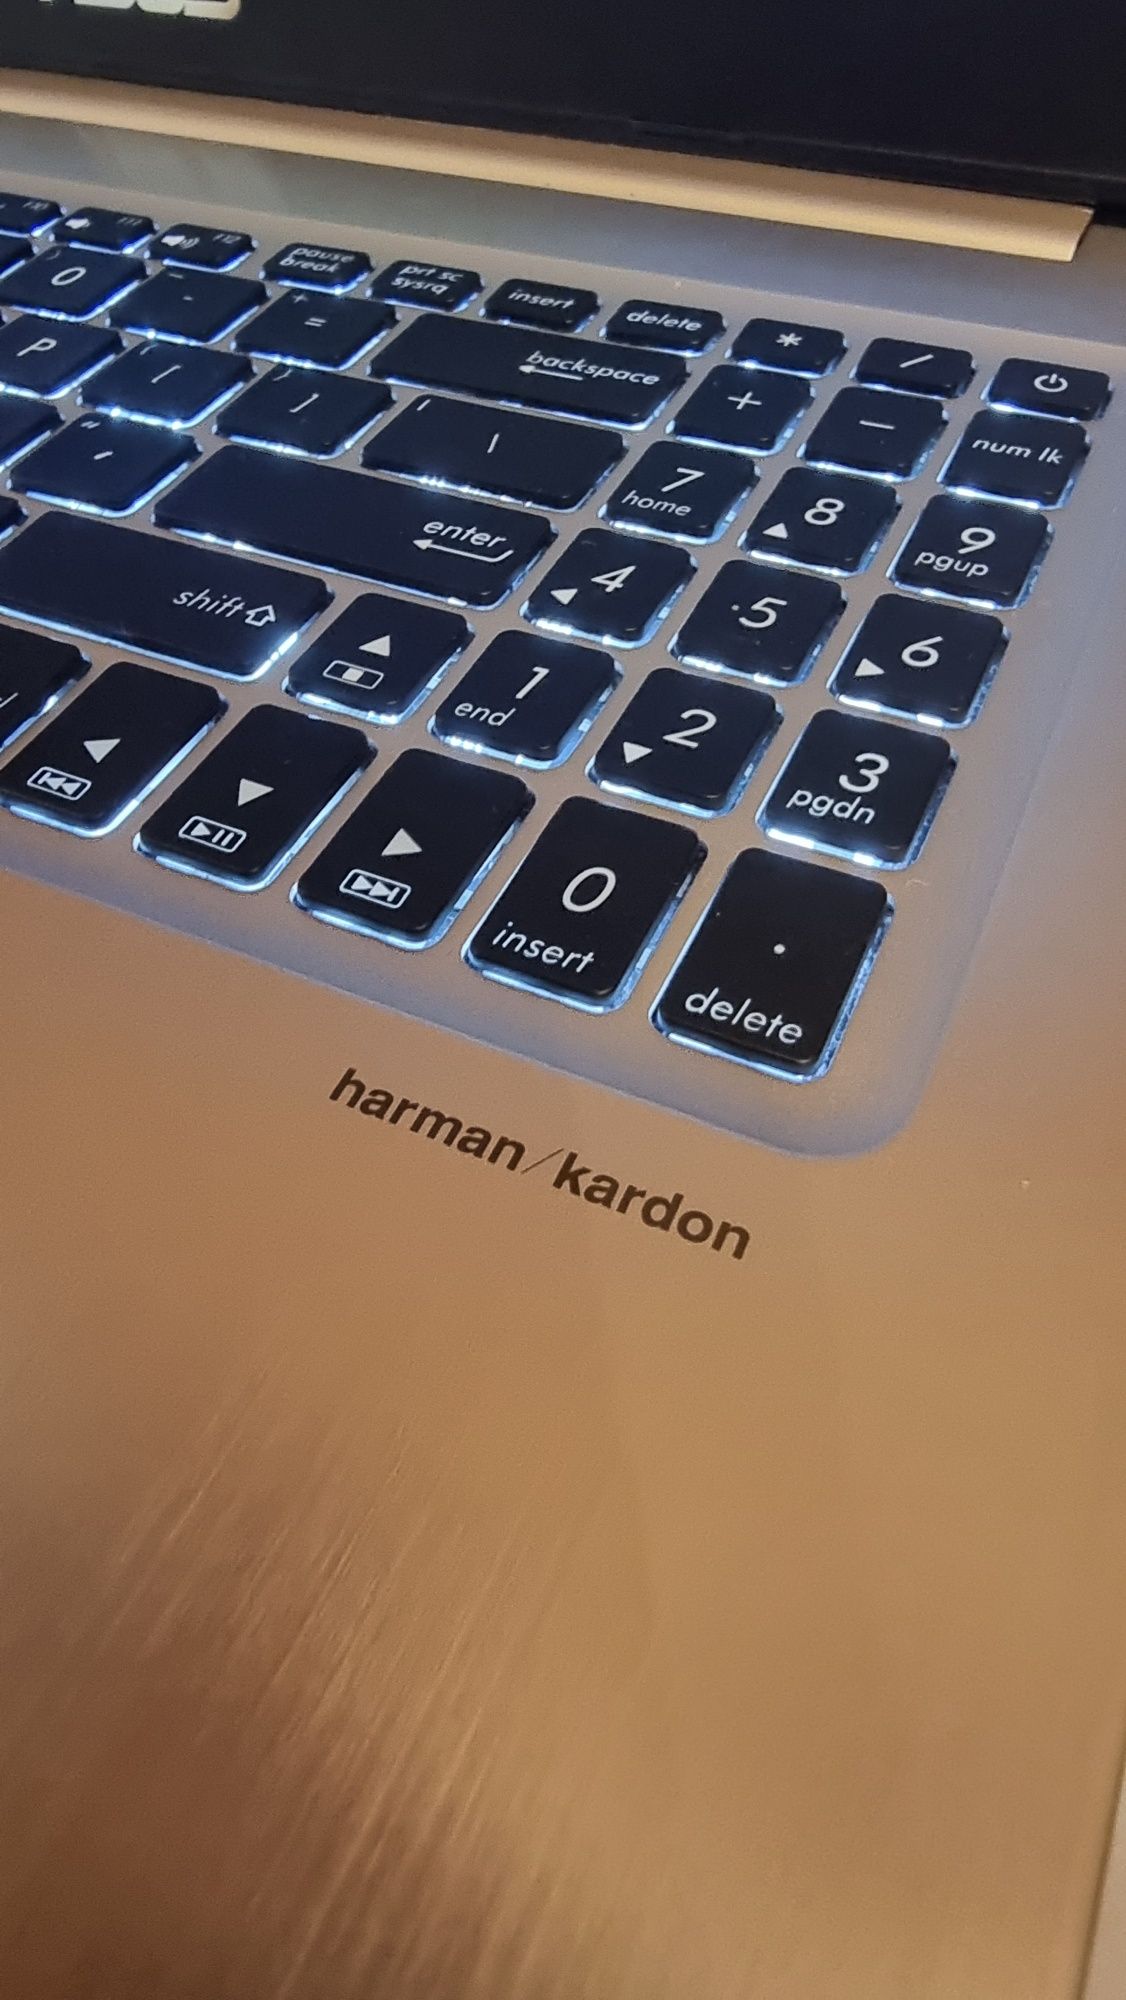 Laptop Asus VivoBook Pro N580V 15.6 inch, i7 , GTX 1050, Harman/Kardon